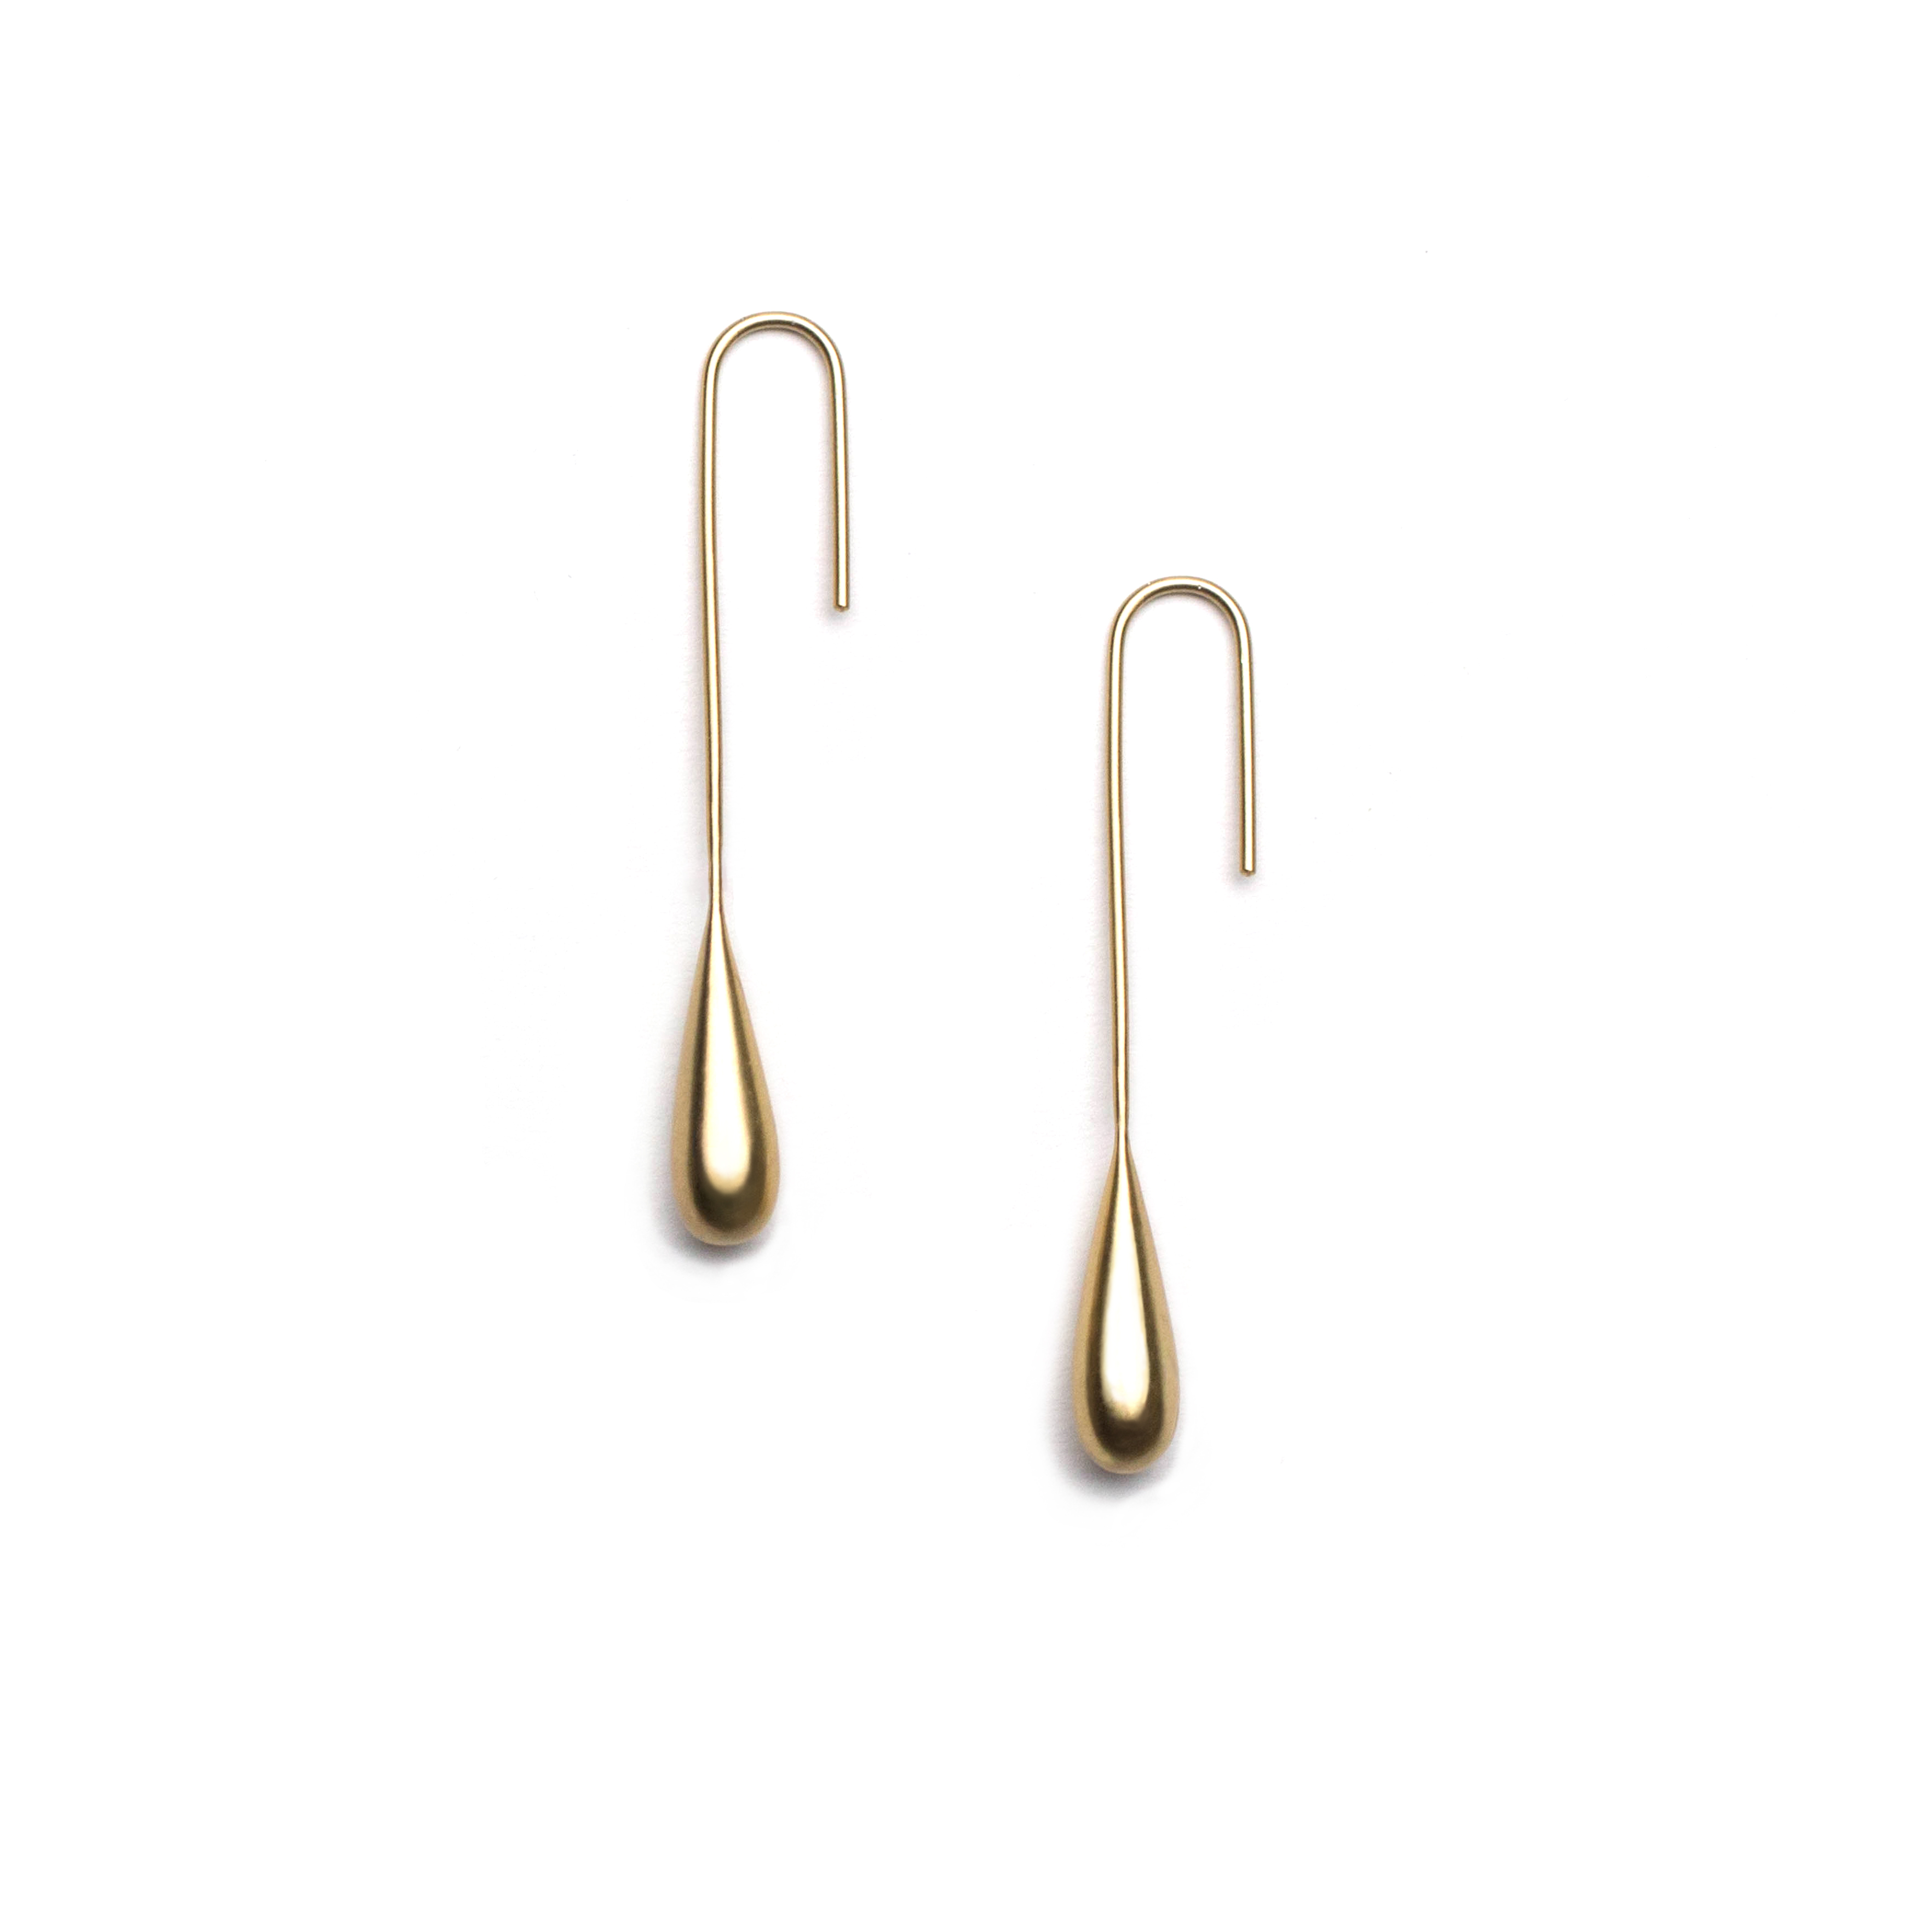 Liquid gold streamline earrings with 14k vermeils